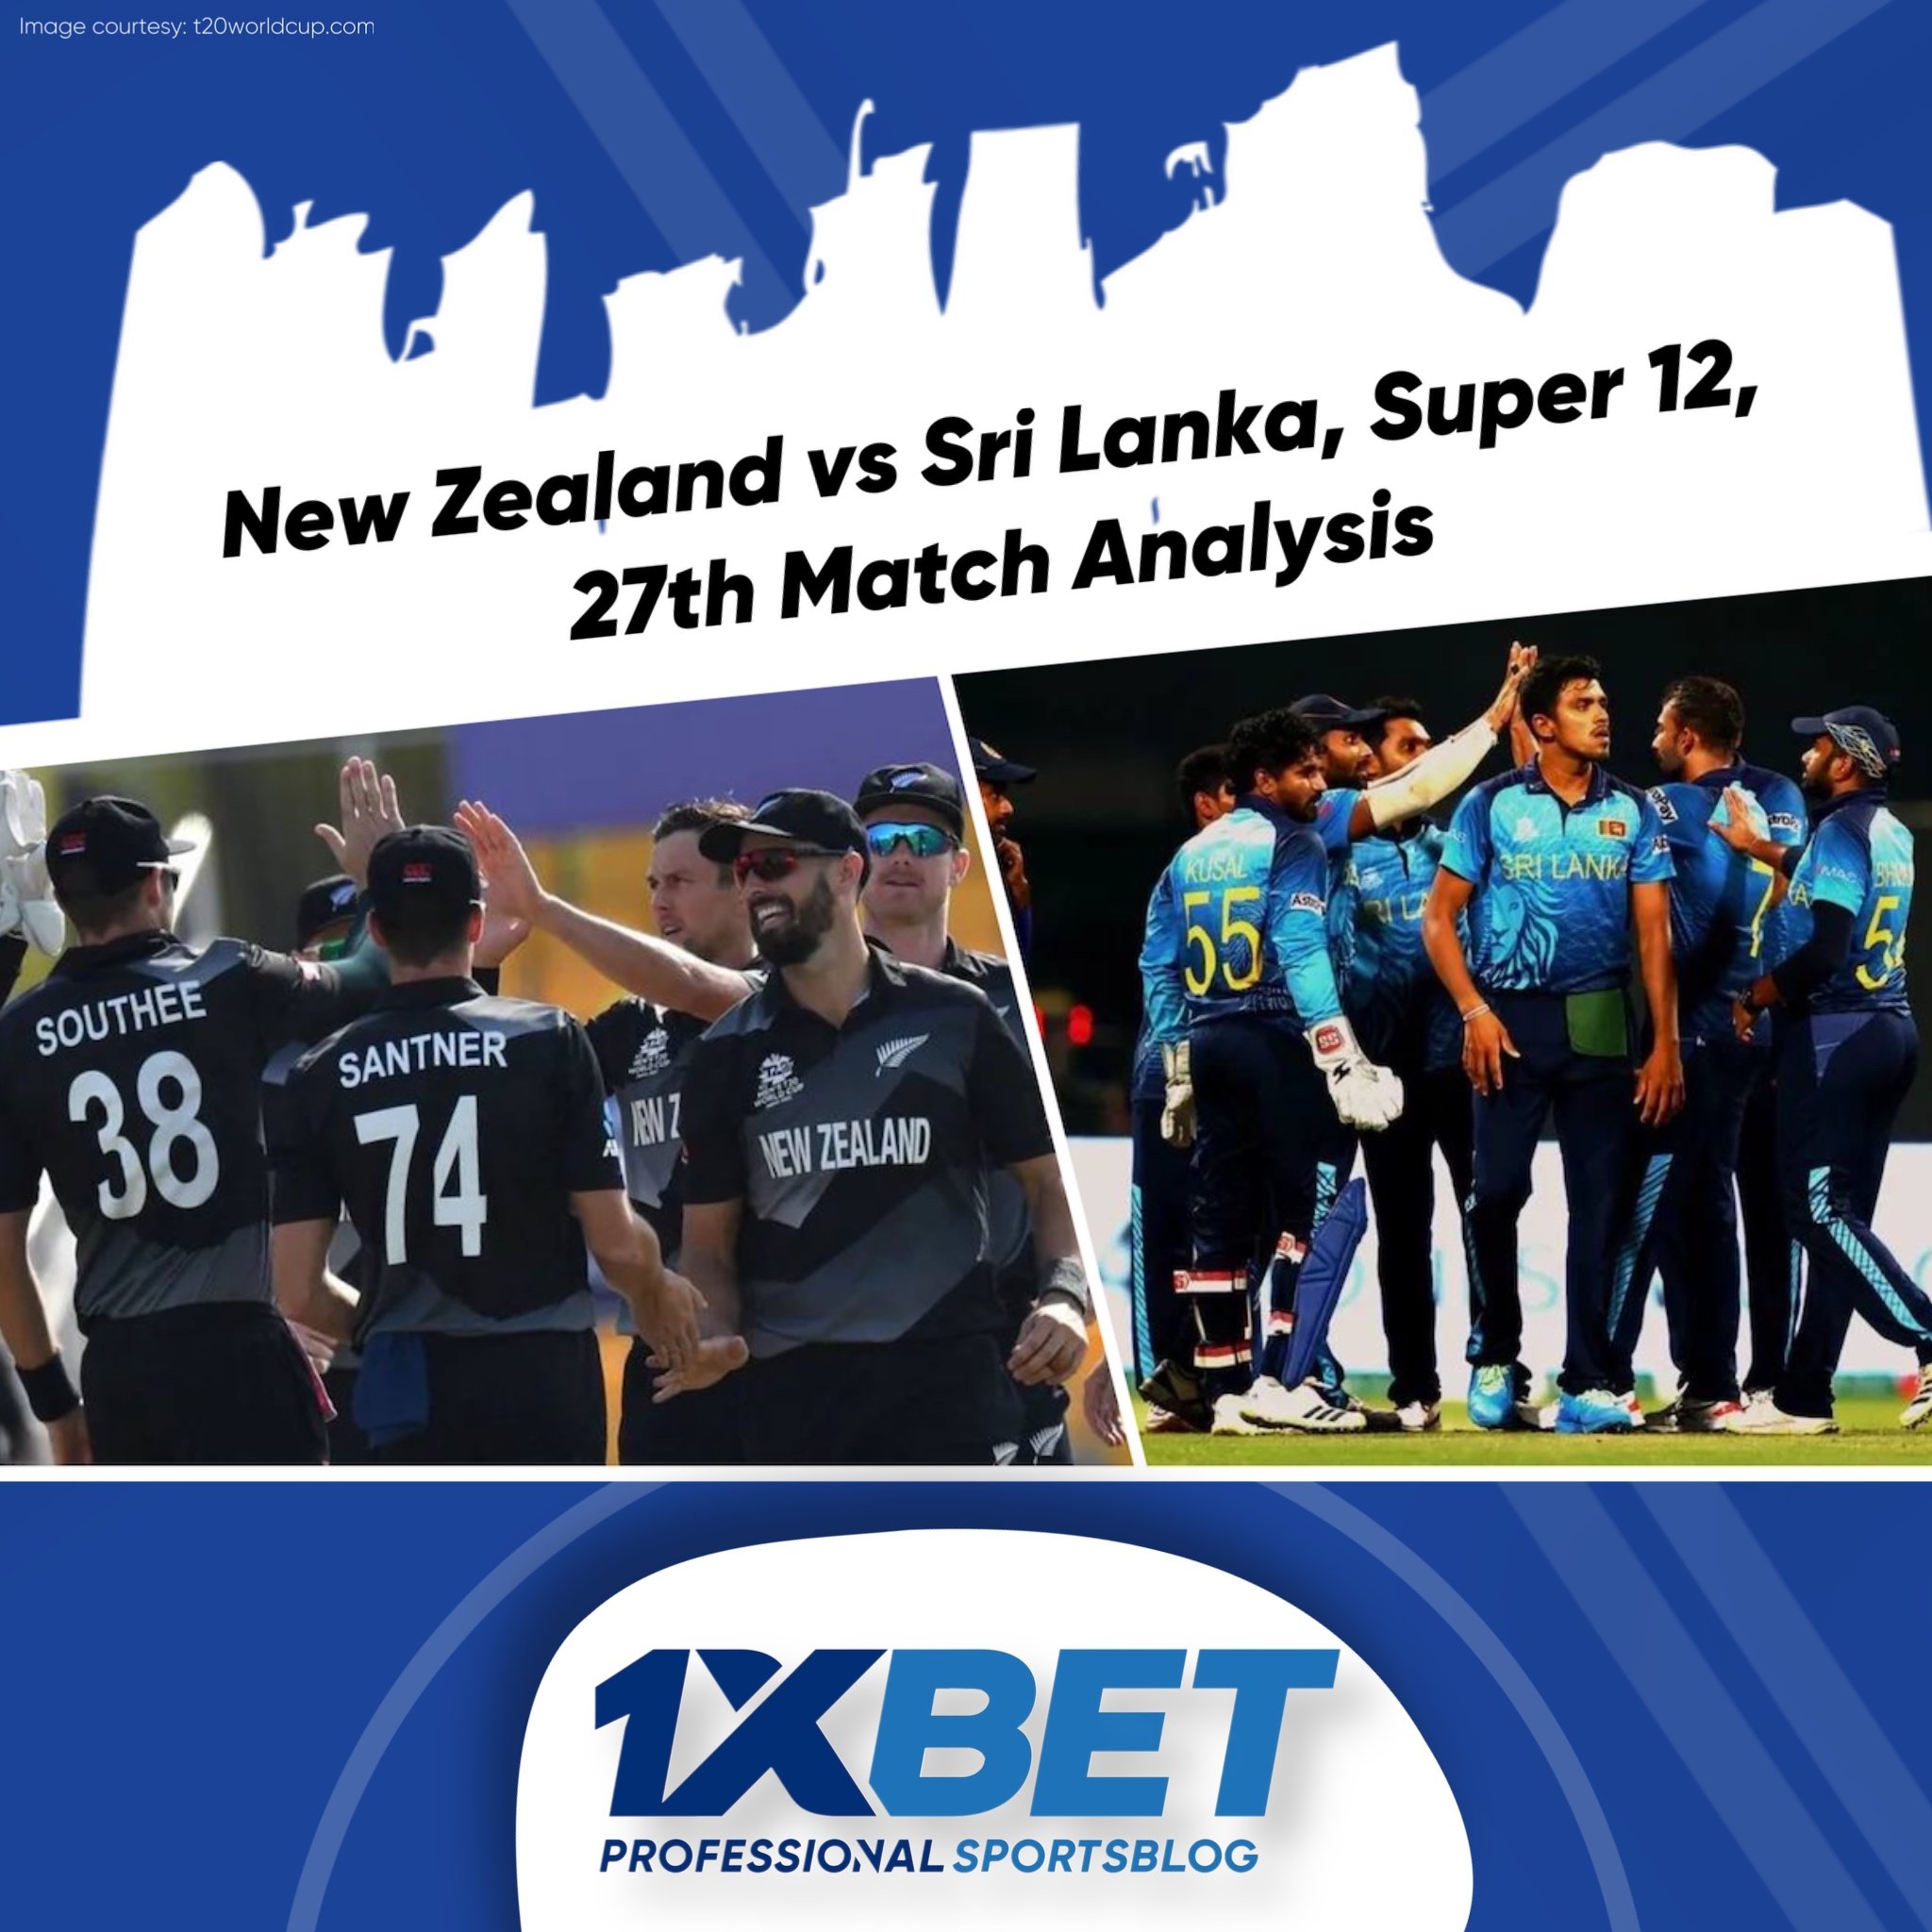 New Zealand vs Sri Lanka, Super 12, 27th Match Analysis